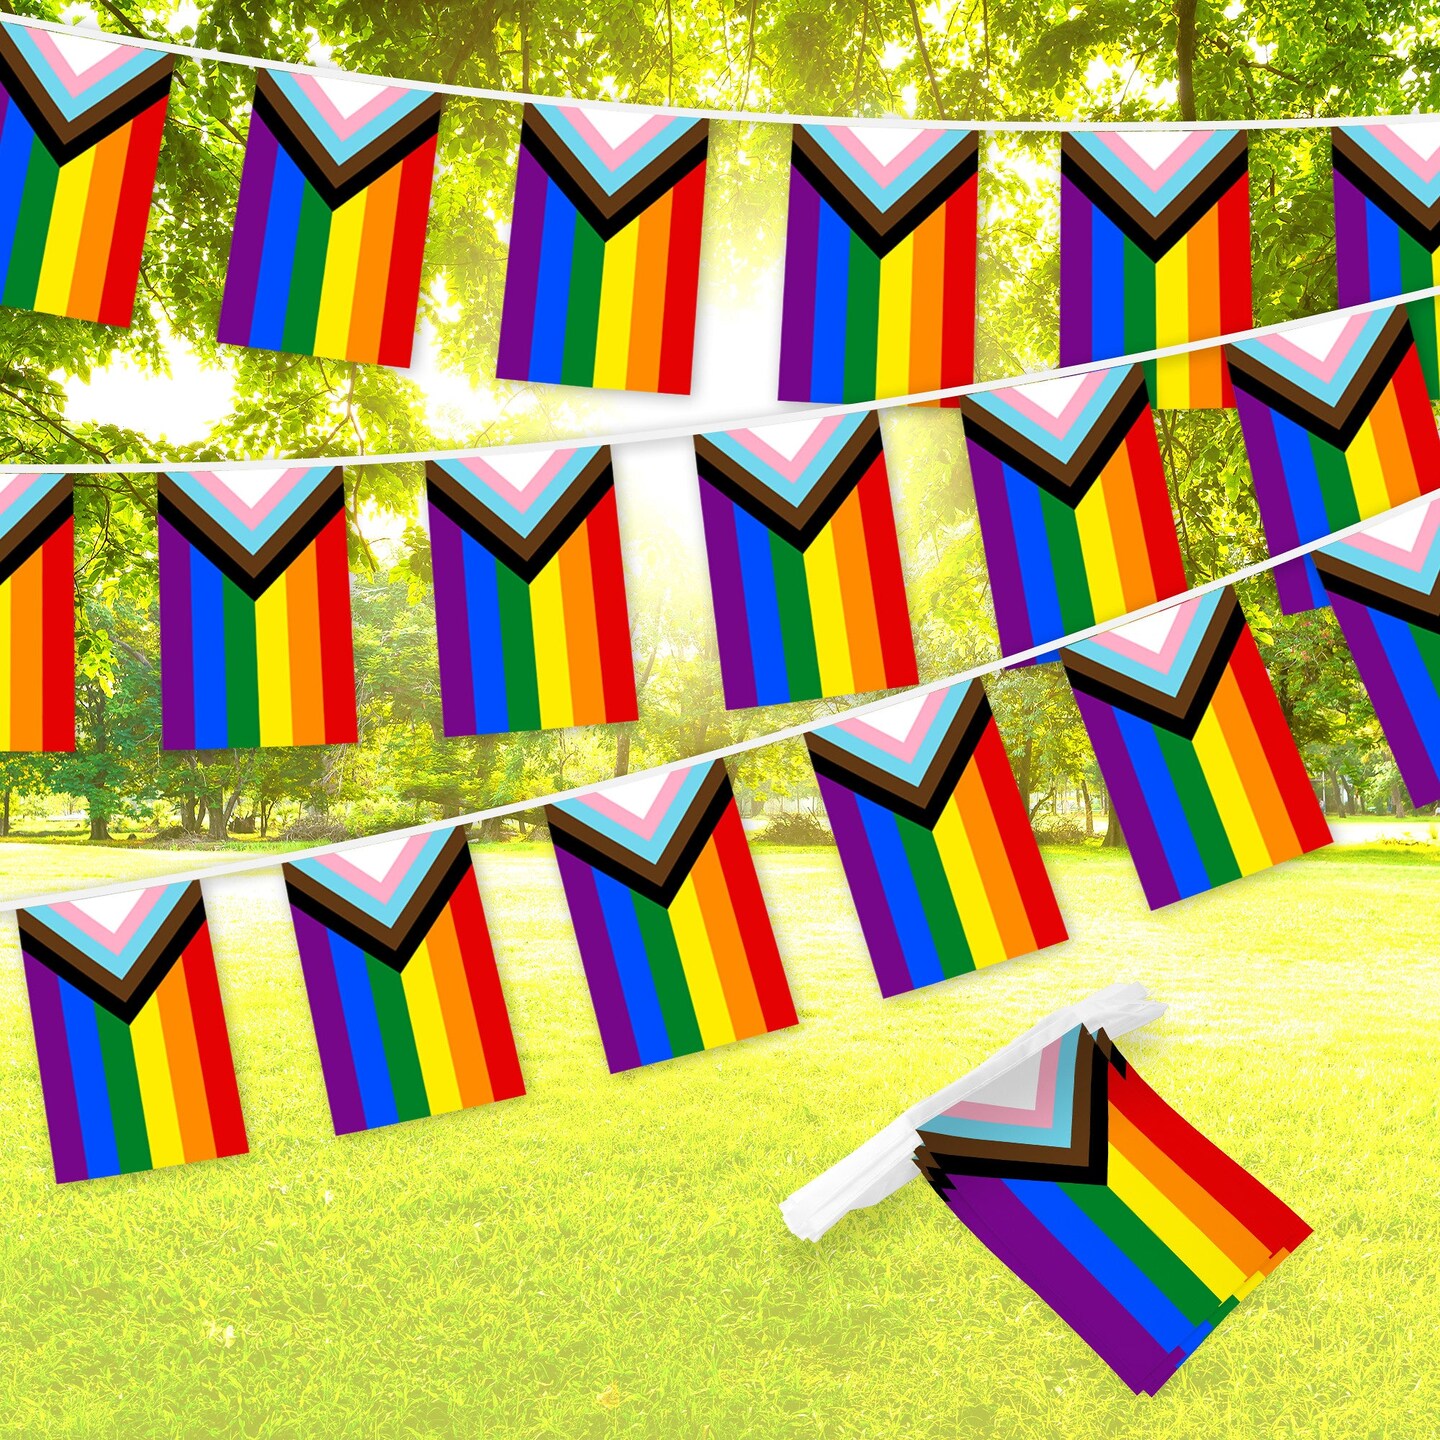 G128 LGBT Progress Rainbow Pride Bunting Banner | Flag 8.2 x 5.5 Inch, Full String 33 Feet | Printed 150D Polyester, Decorations For Bar, School, Festival Events Celebration